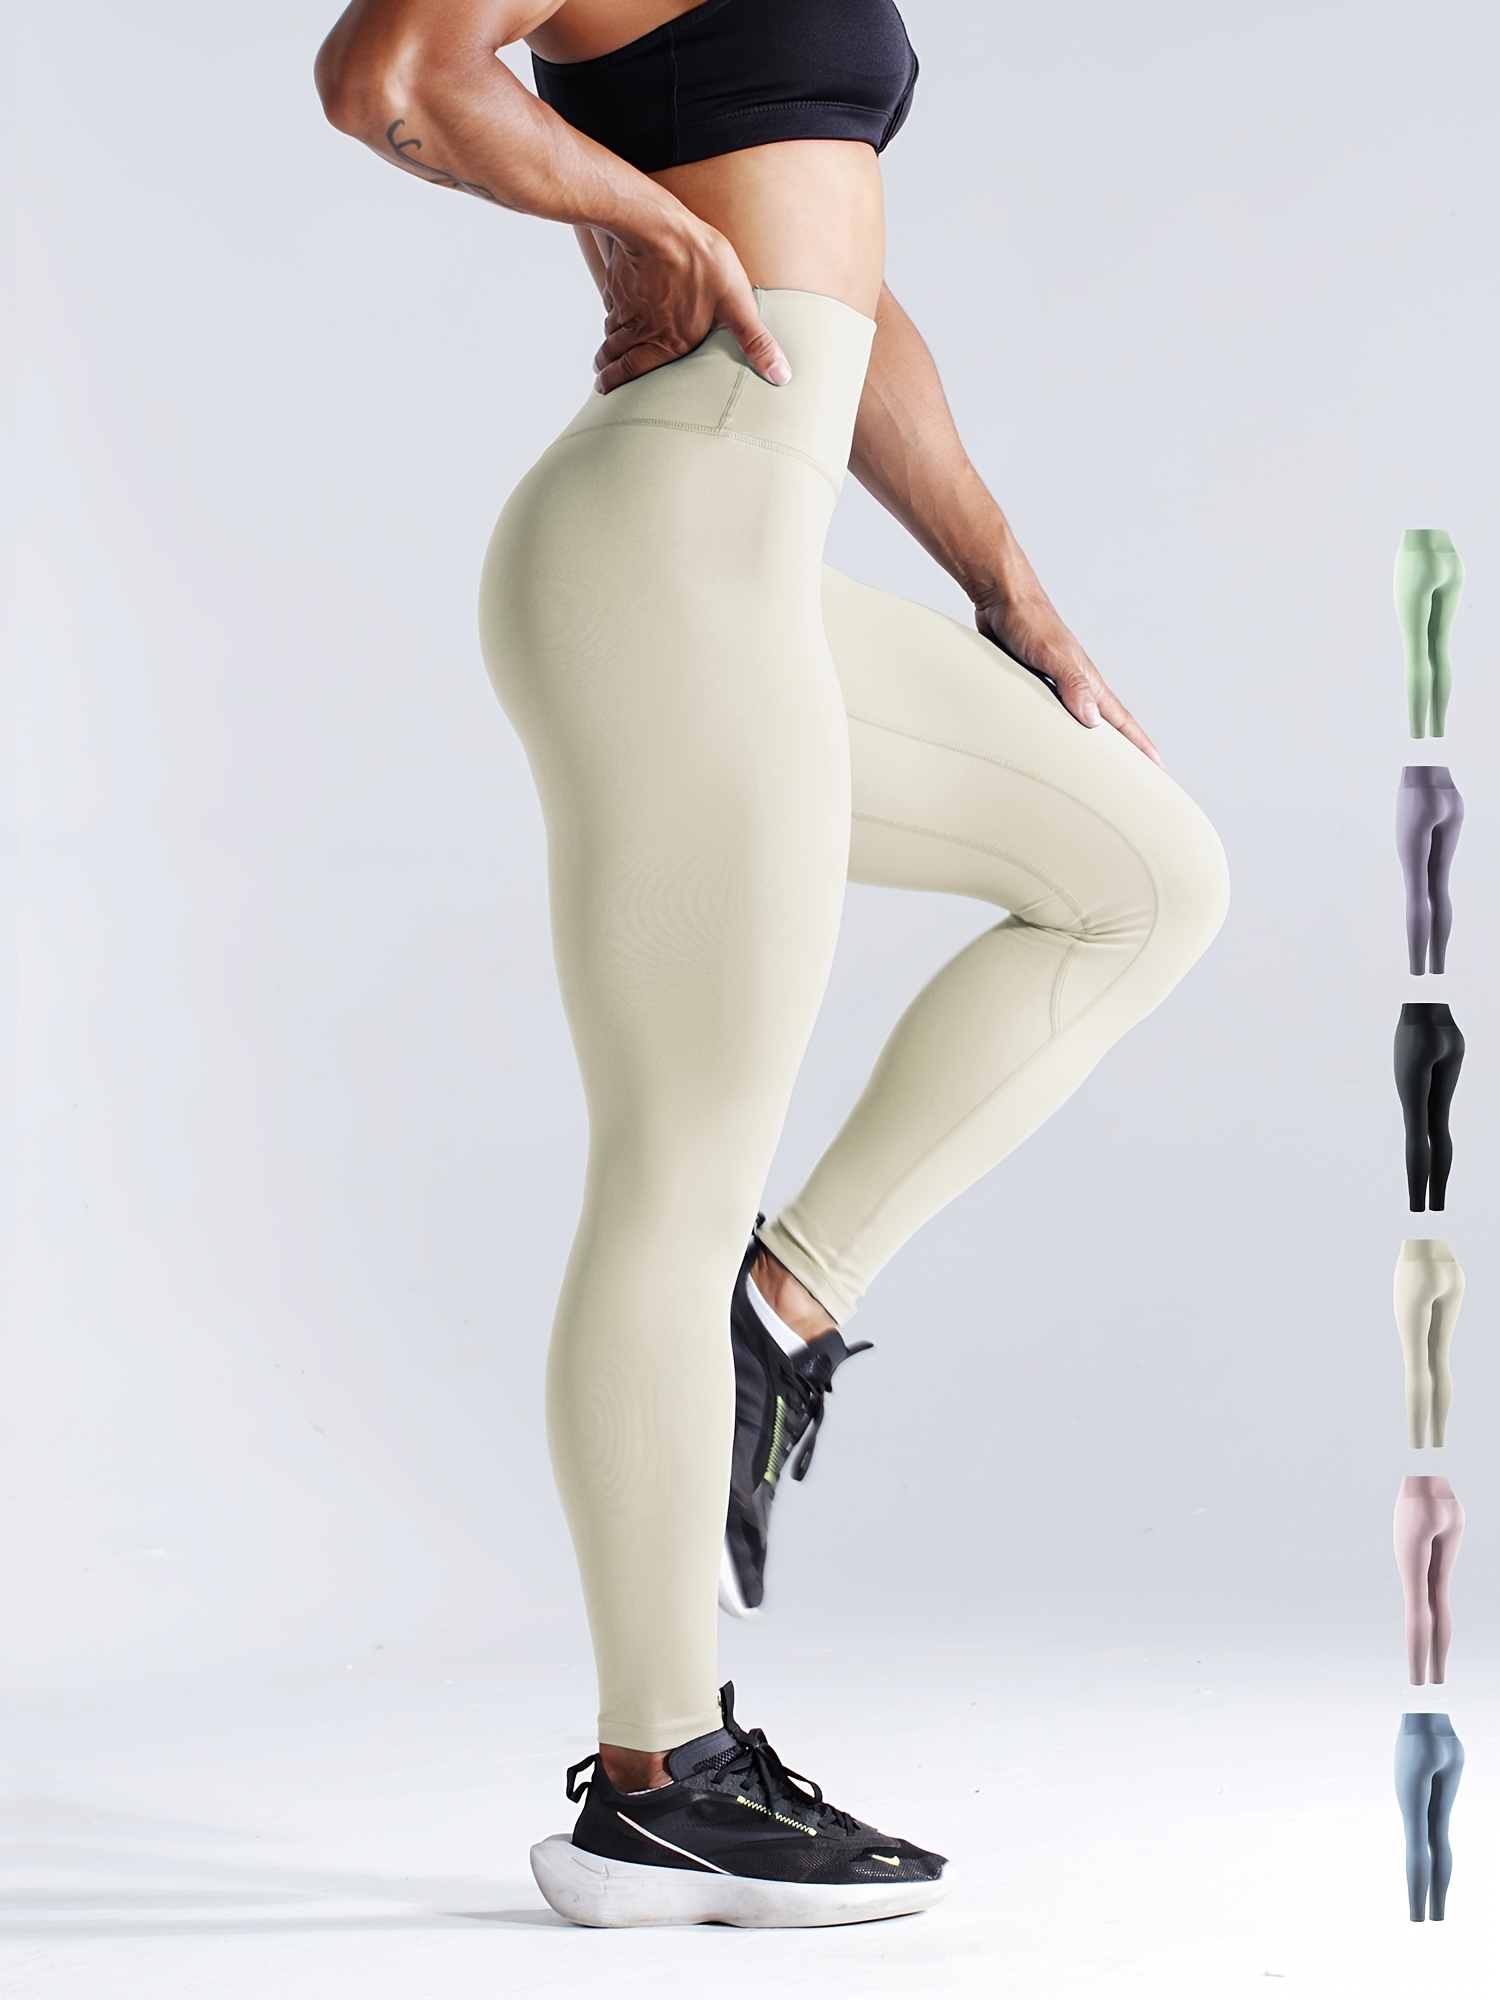 Ediodpoh Women' Yoga Pants Bright Sports Pants Thin High Waist